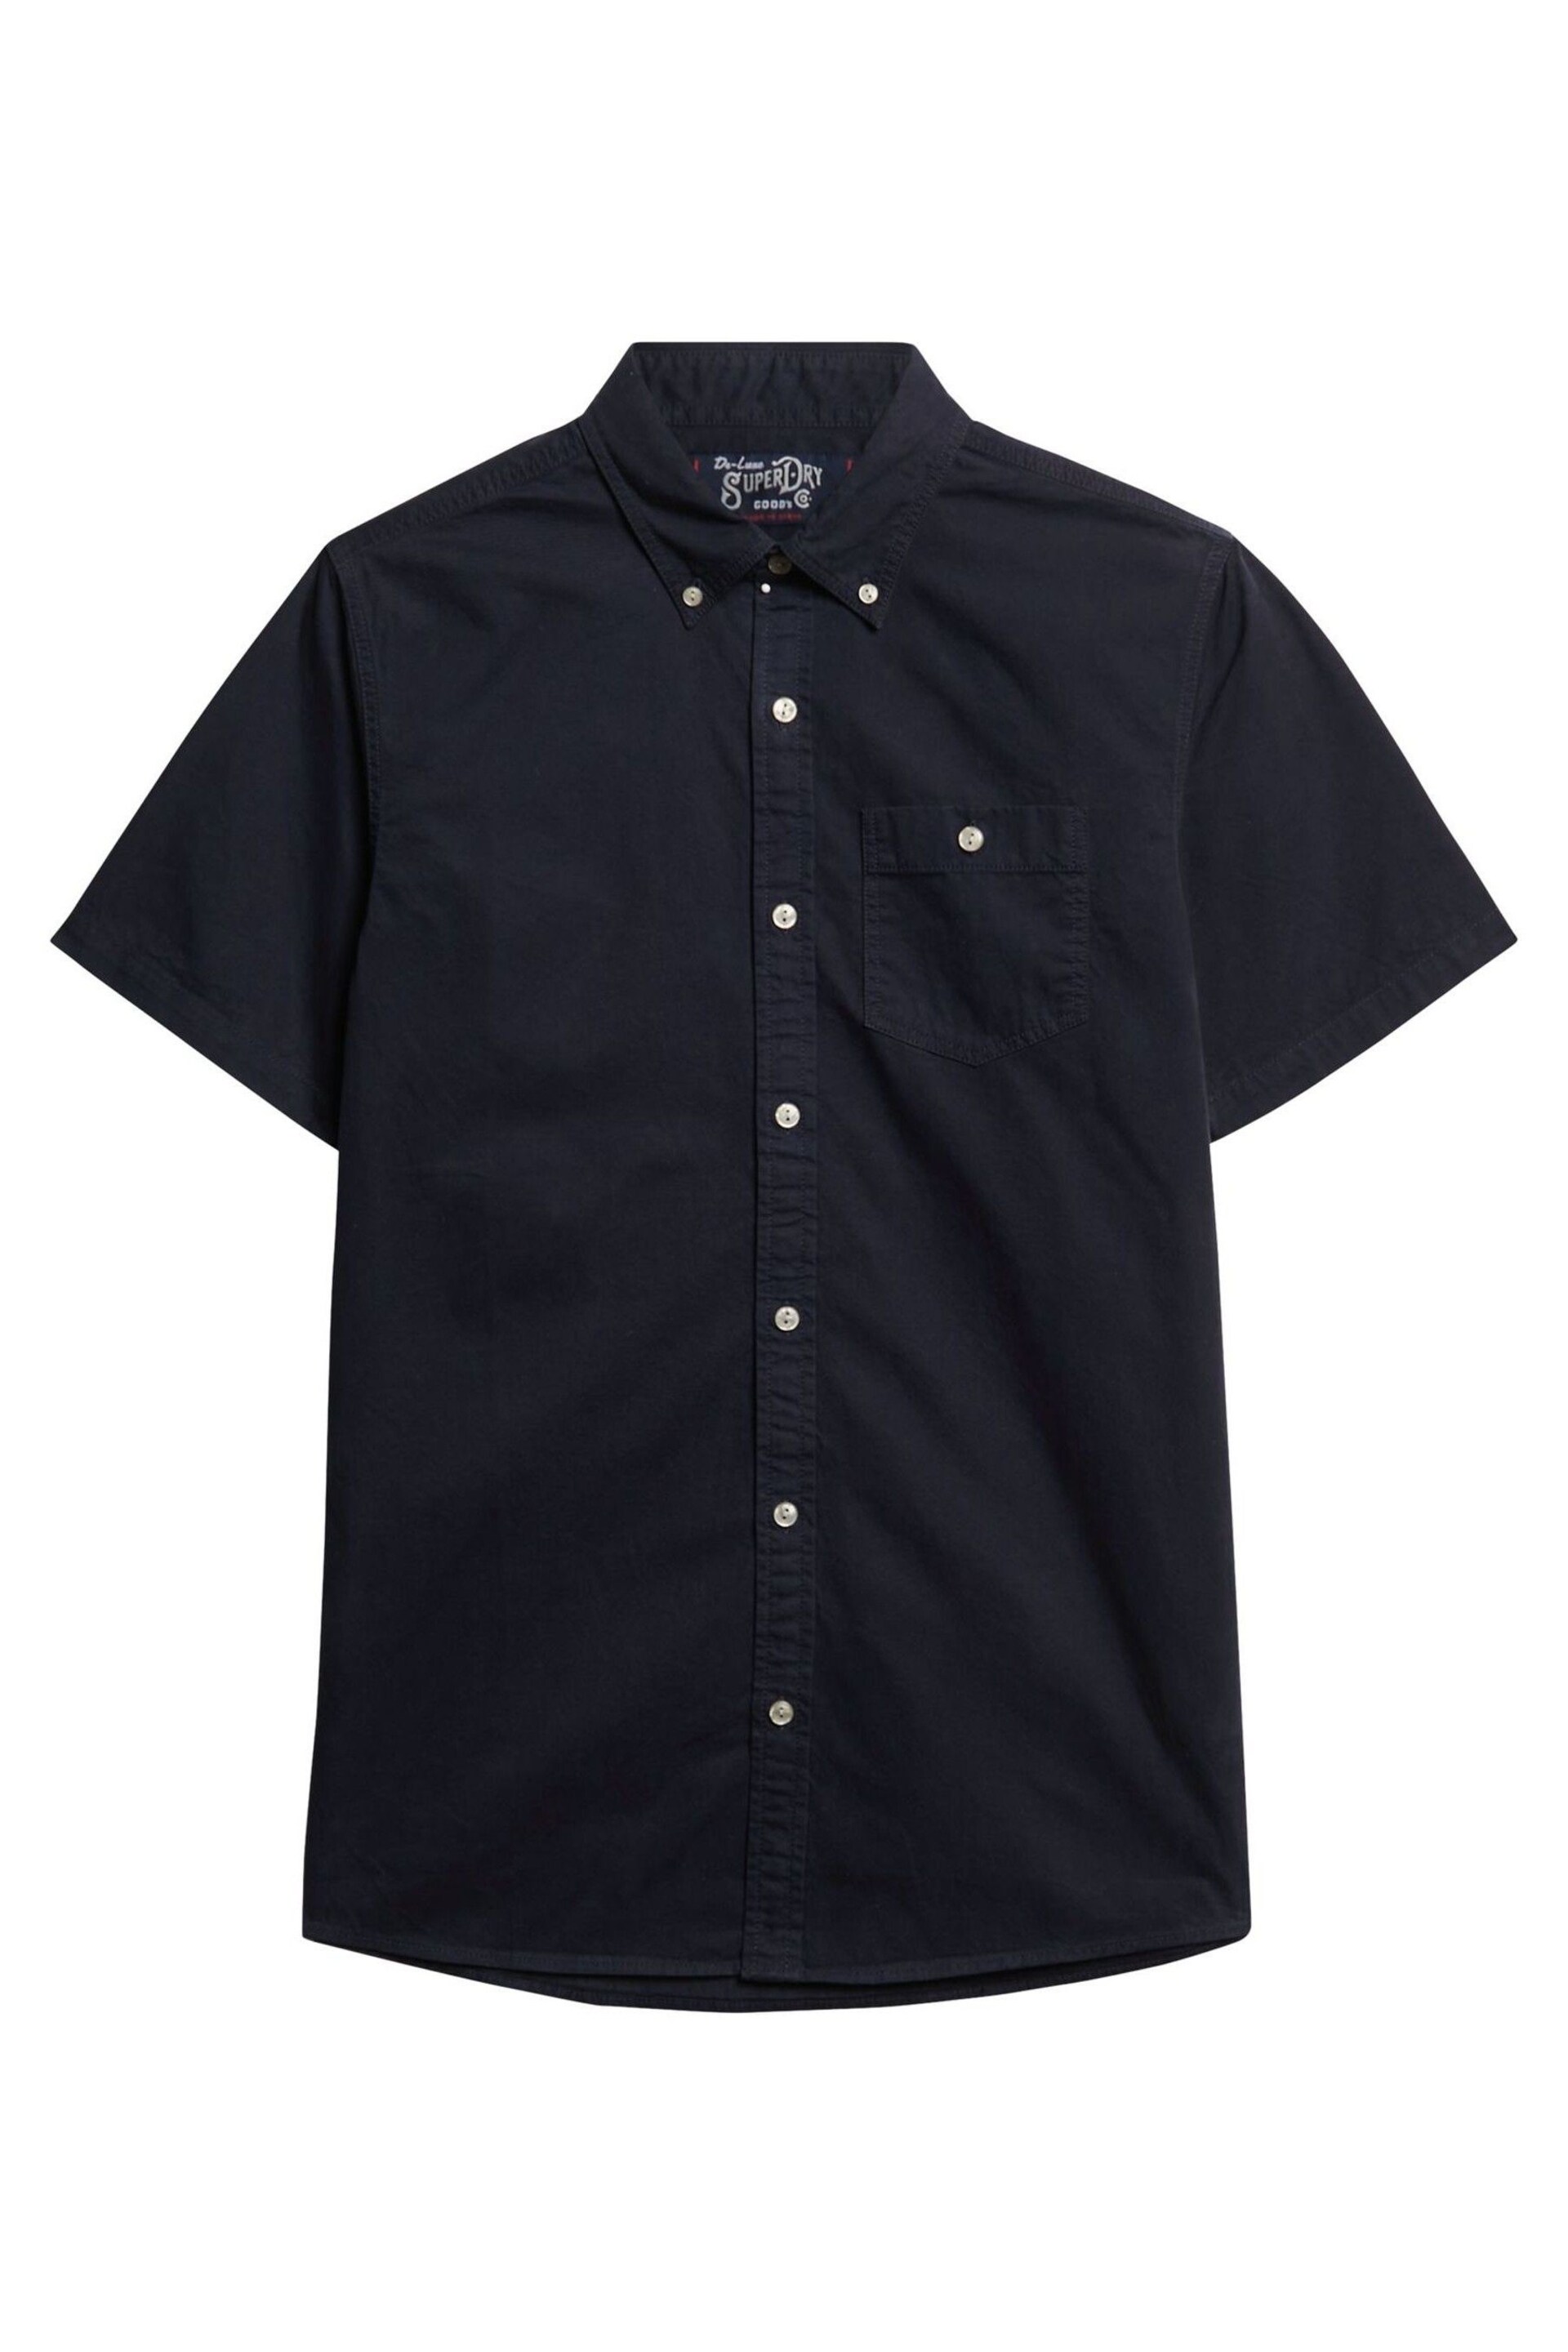 Superdry Blue Merchant Store Short Sleeve Shirt - Image 3 of 5